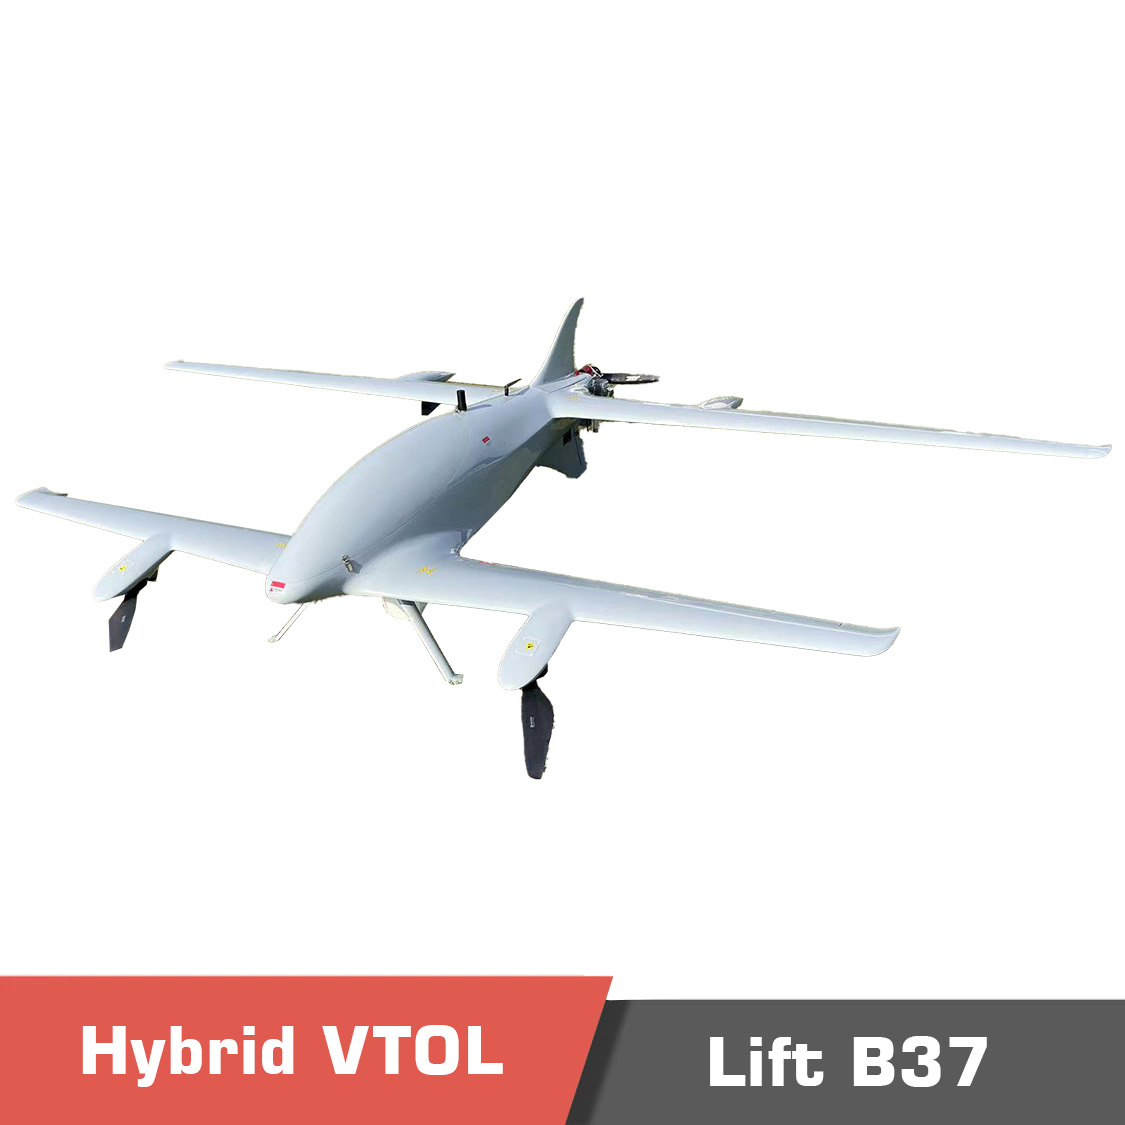 Temp lift b37. 1 - 30 kg heavy lift vtol drone - motionew - 1